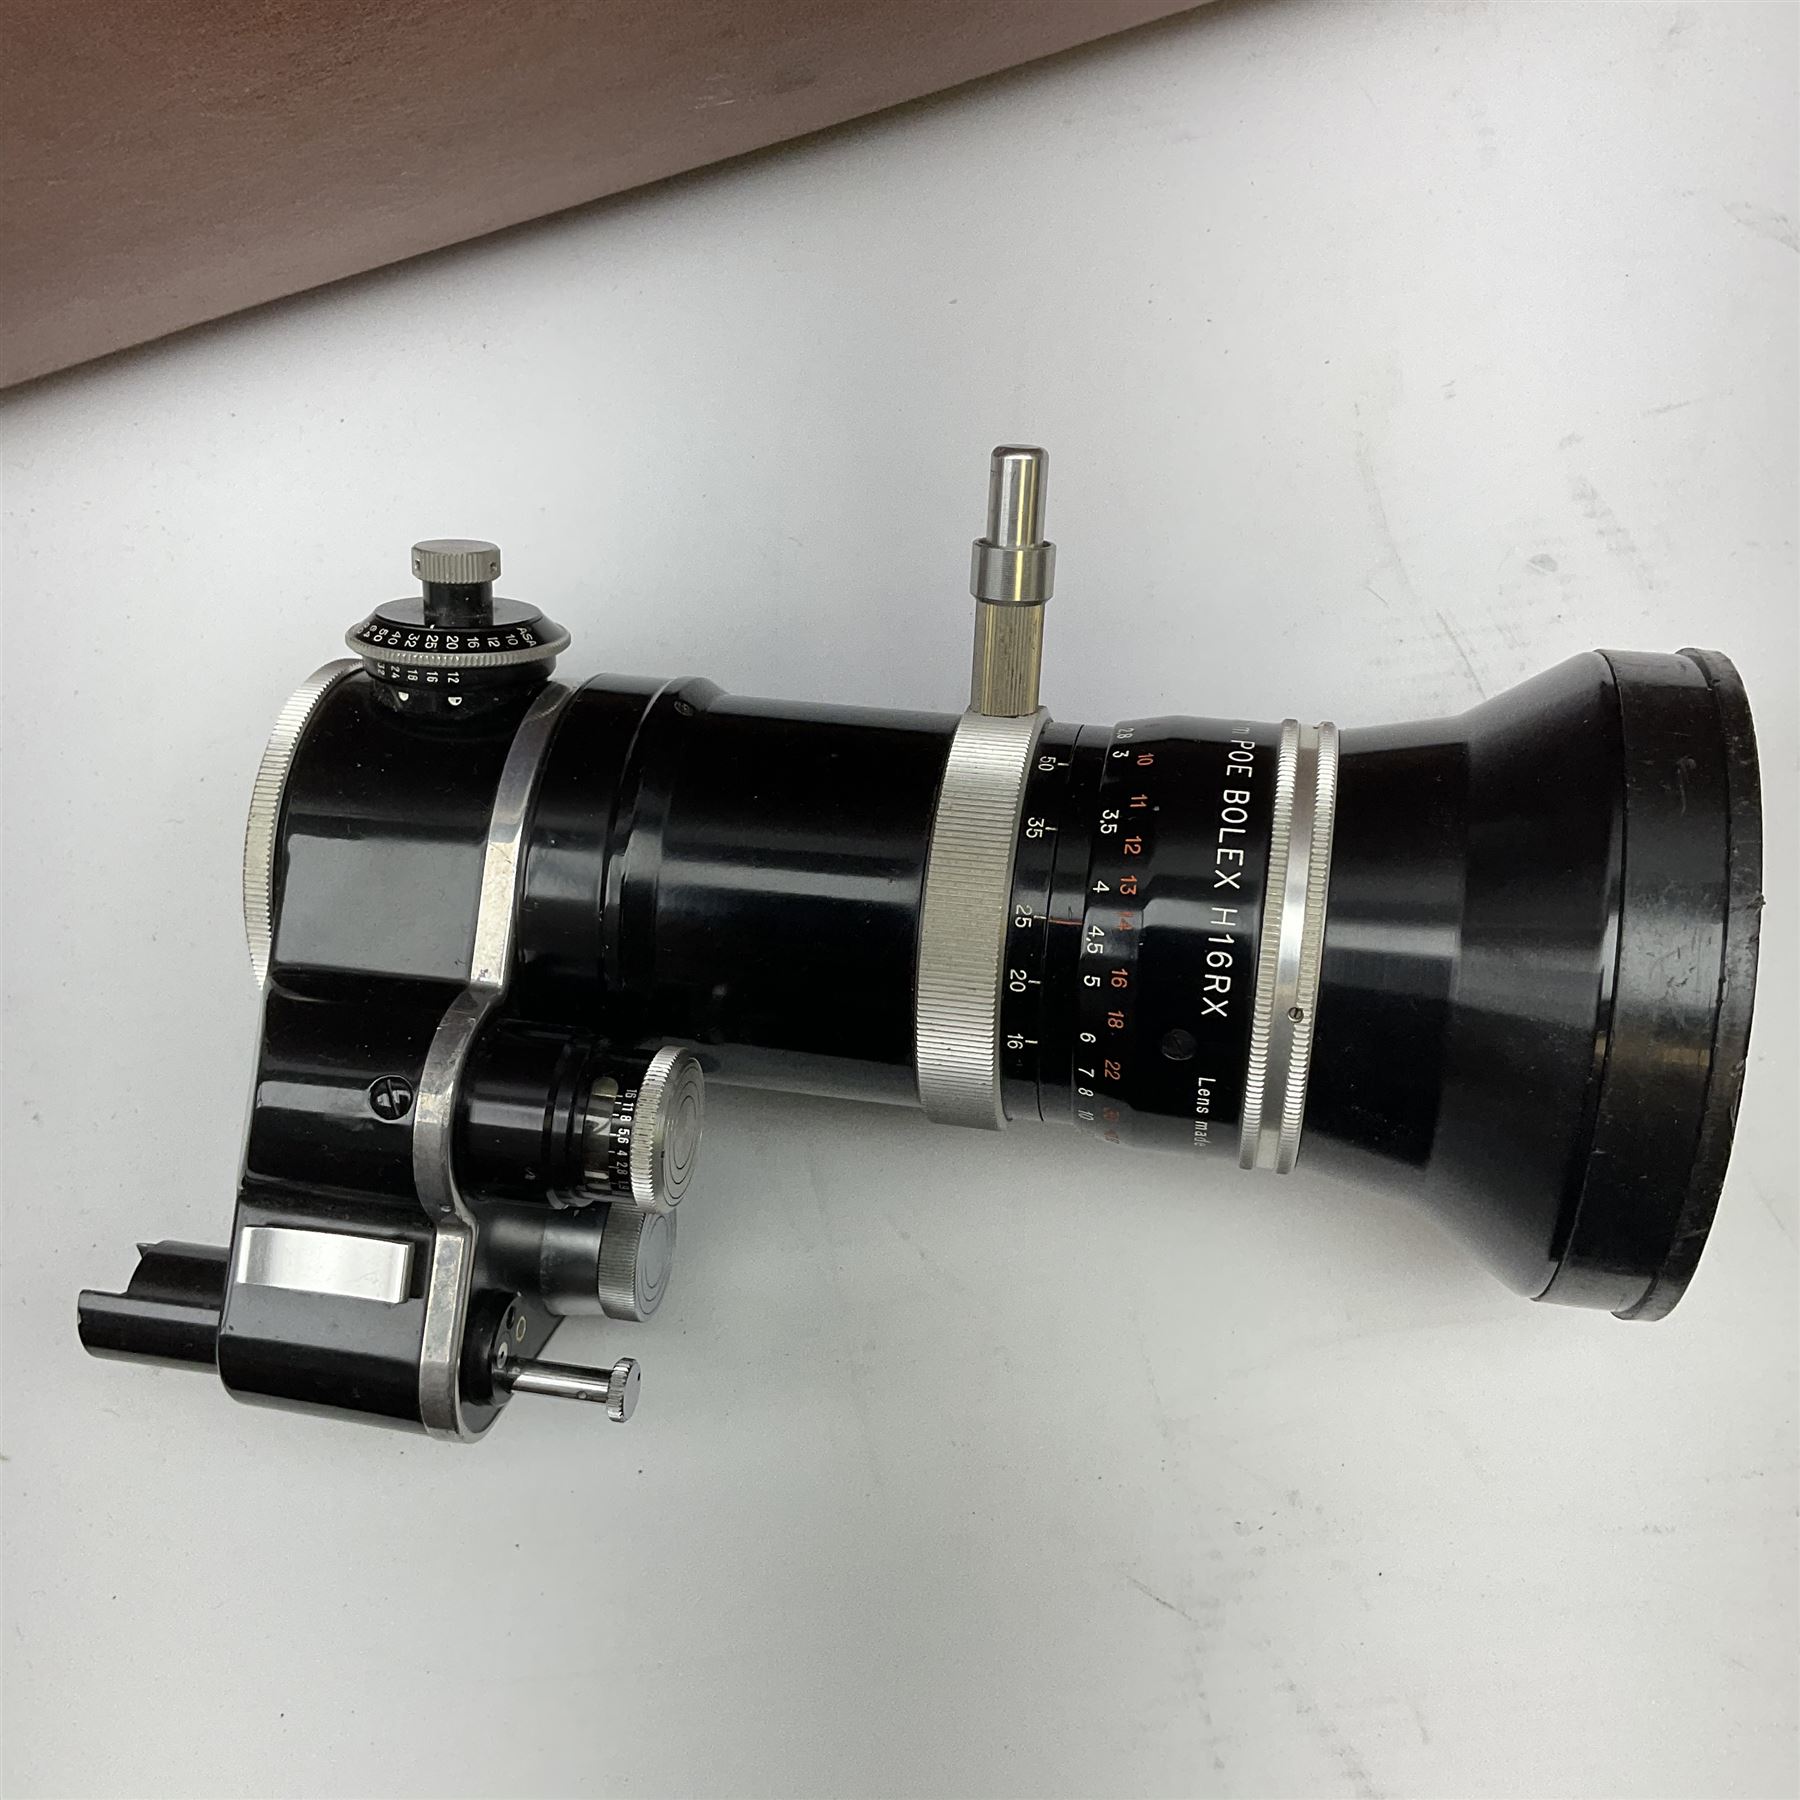 Paillard Bolex H16 Reflex 16mm cine camera with handgrip and turret for interchangeable lenses - Image 10 of 15